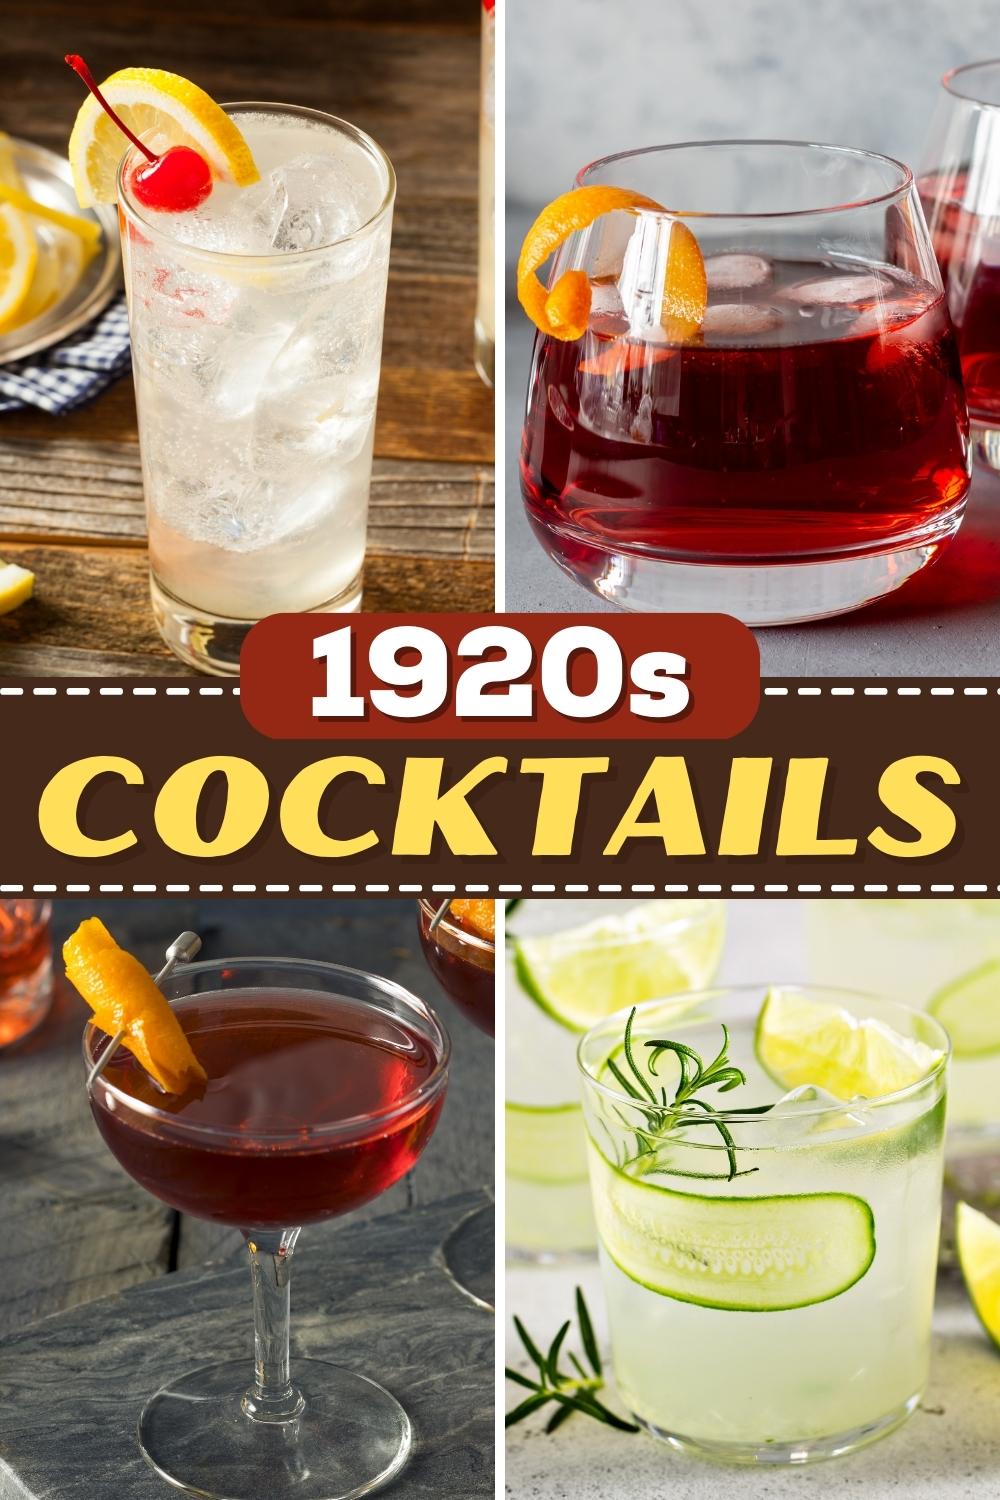 1920s Cocktails